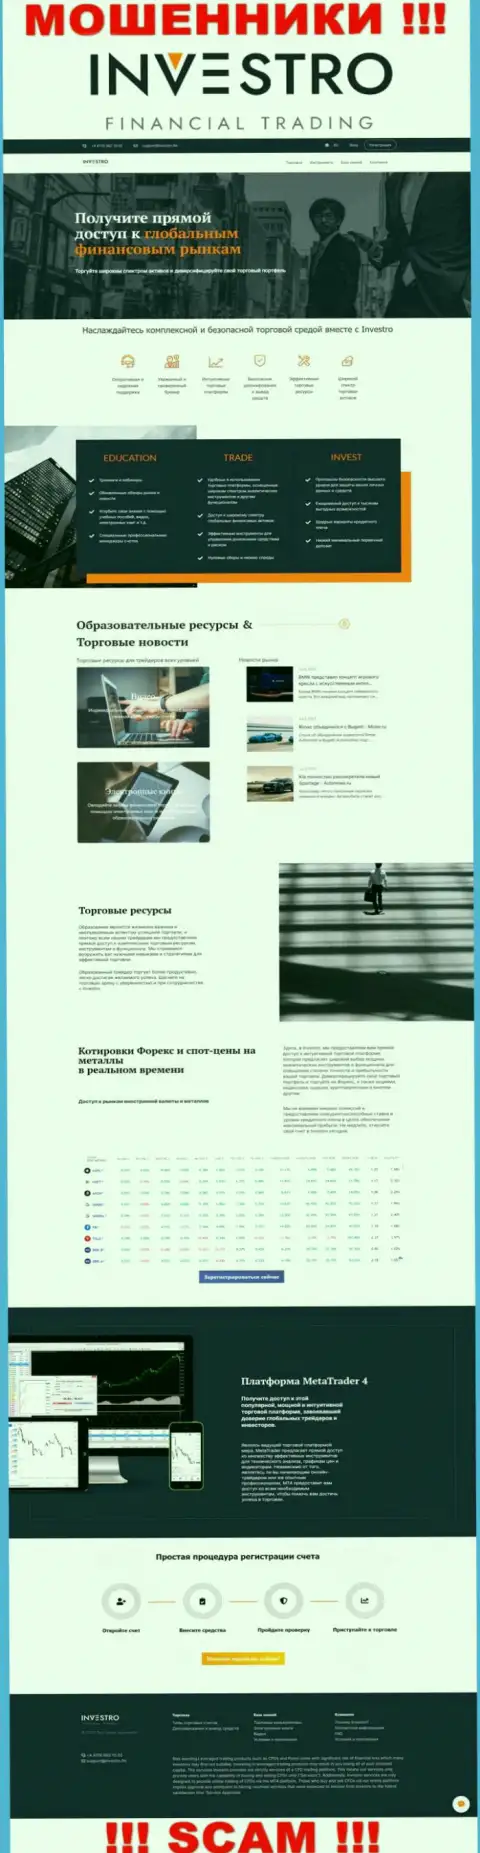 Скриншот официального онлайн-ресурса Инвестро - Investro Fm